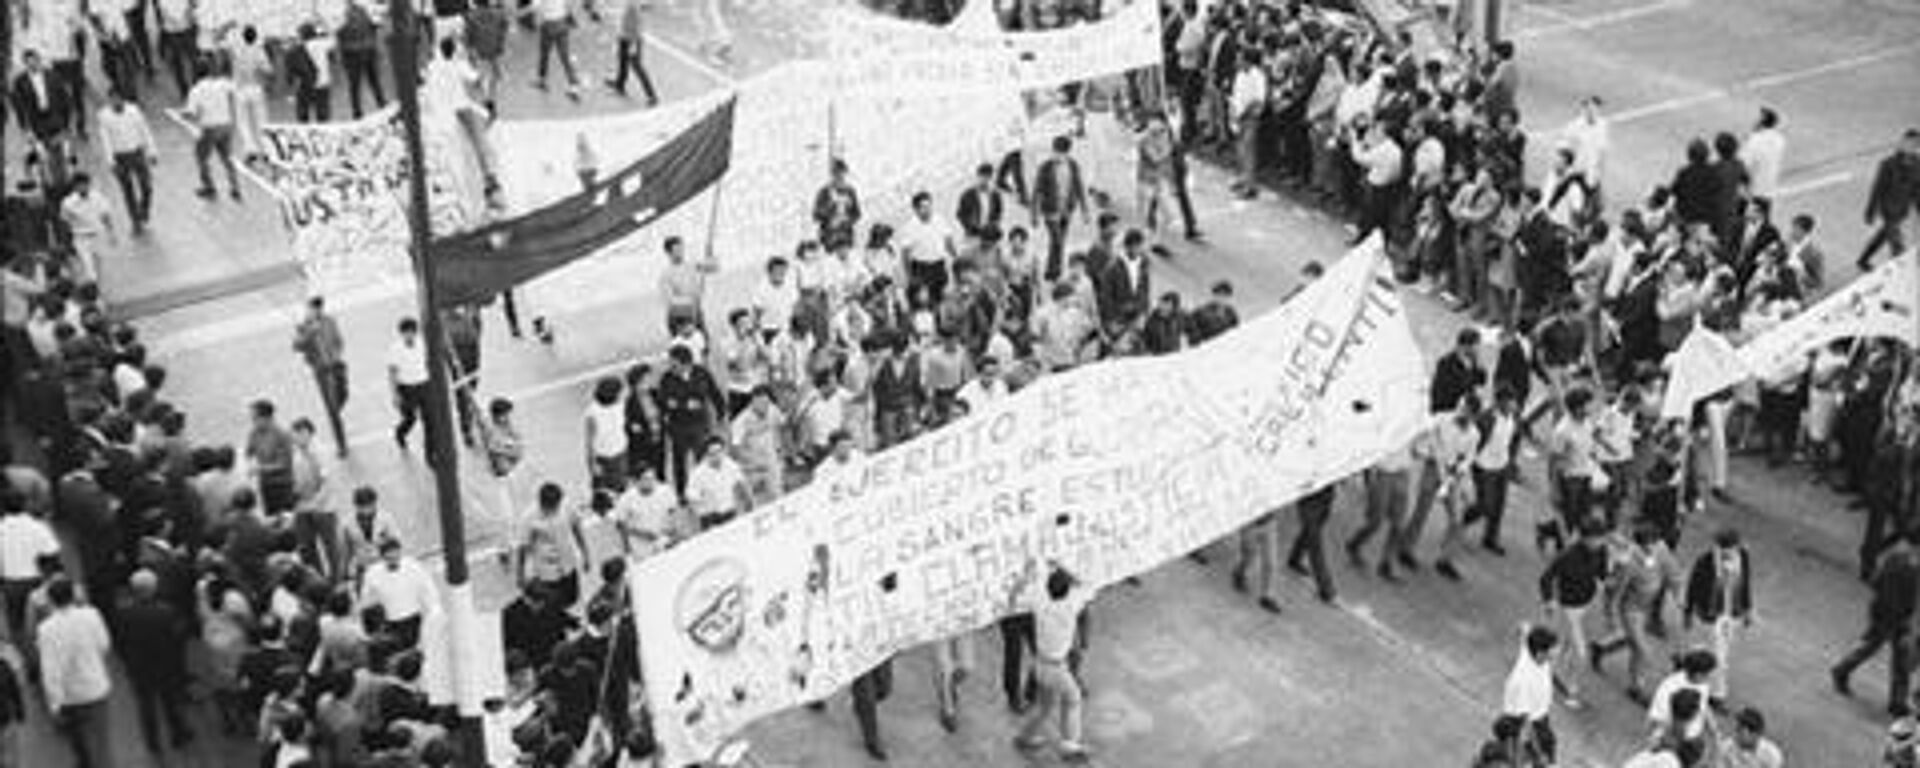 Movimiento estudiantil de 1968 en México - Sputnik Mundo, 1920, 08.10.2021